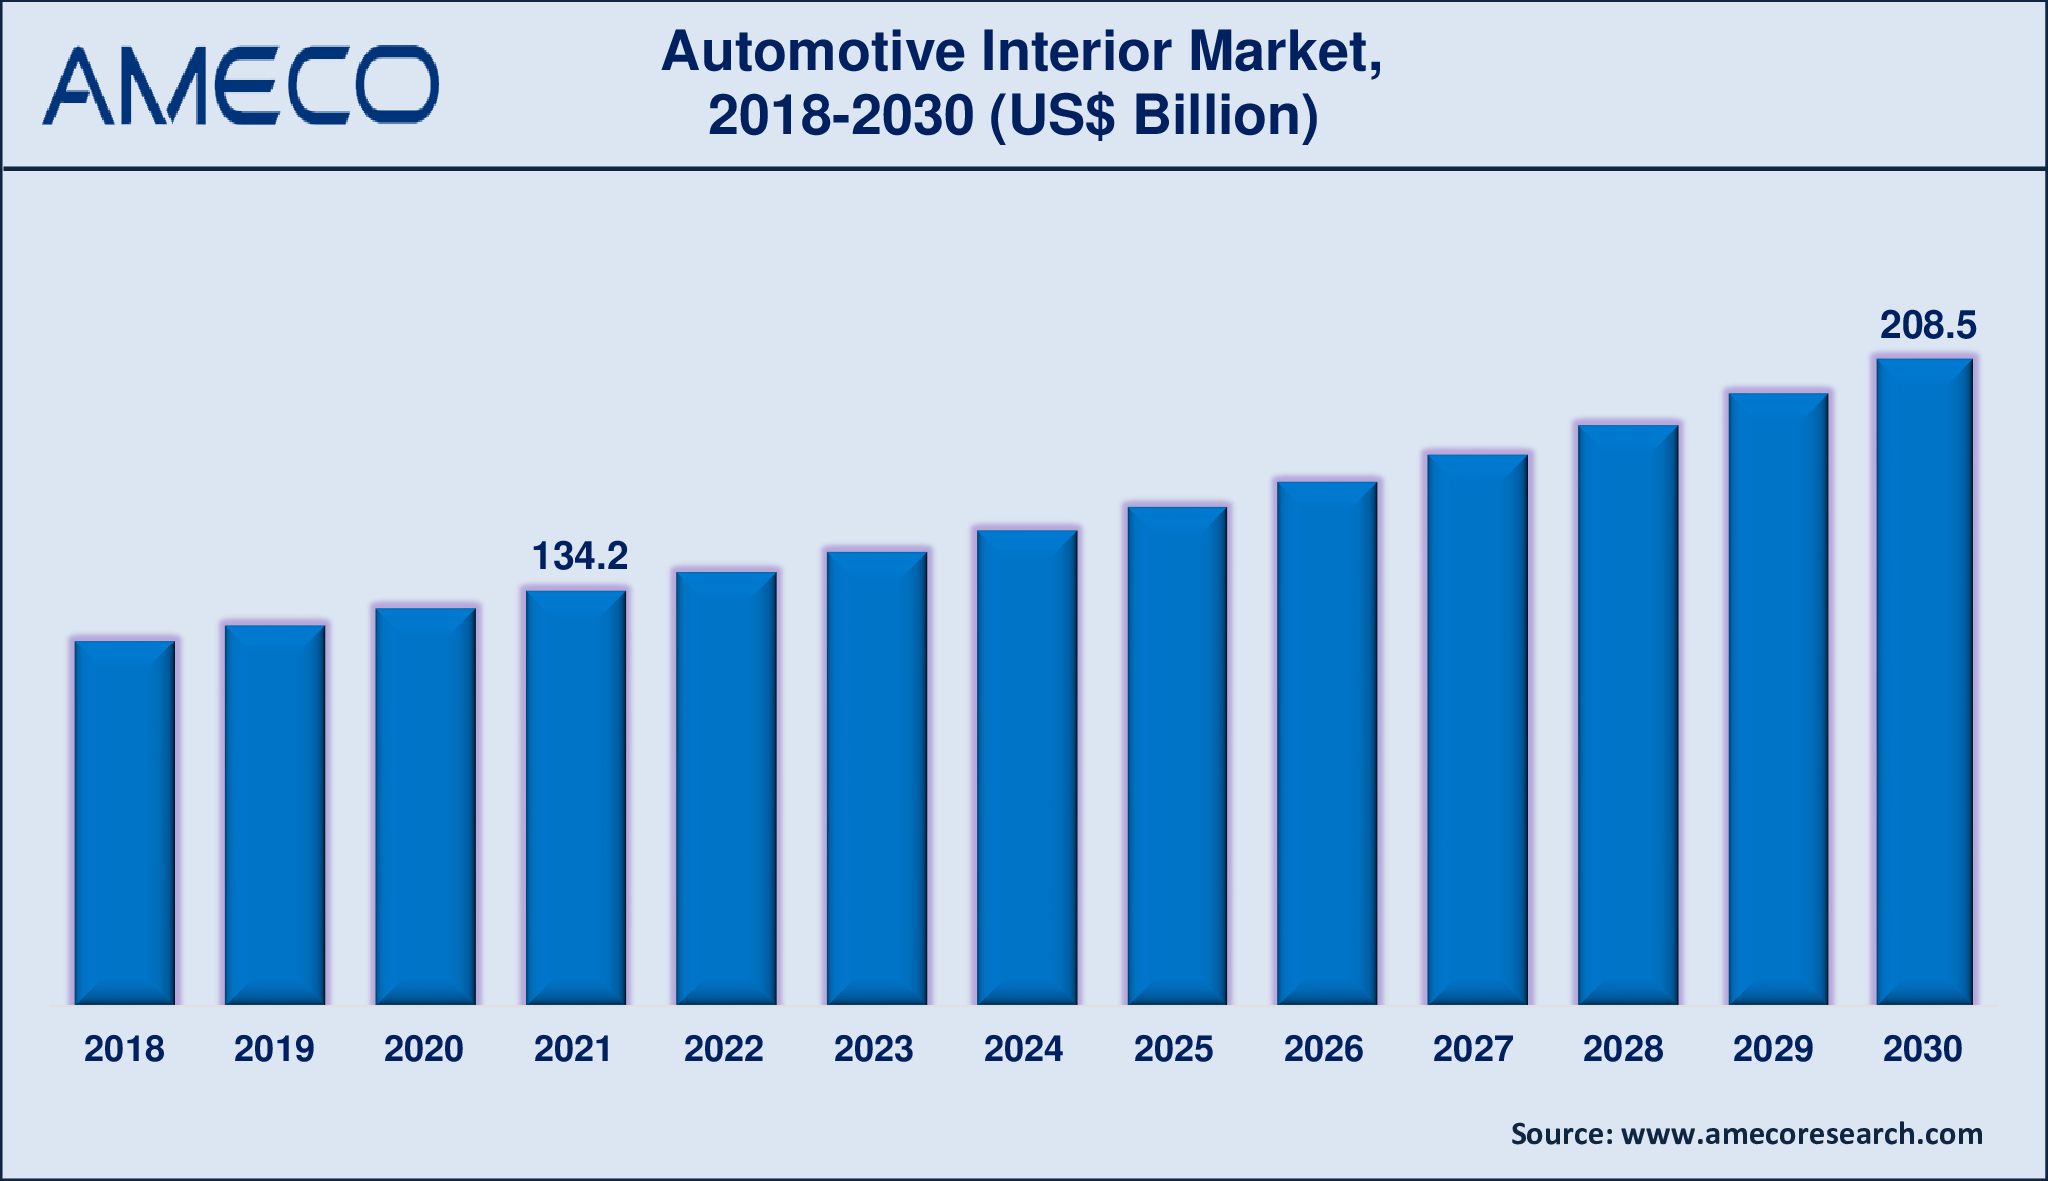 Automotive Interior Market Dynamics